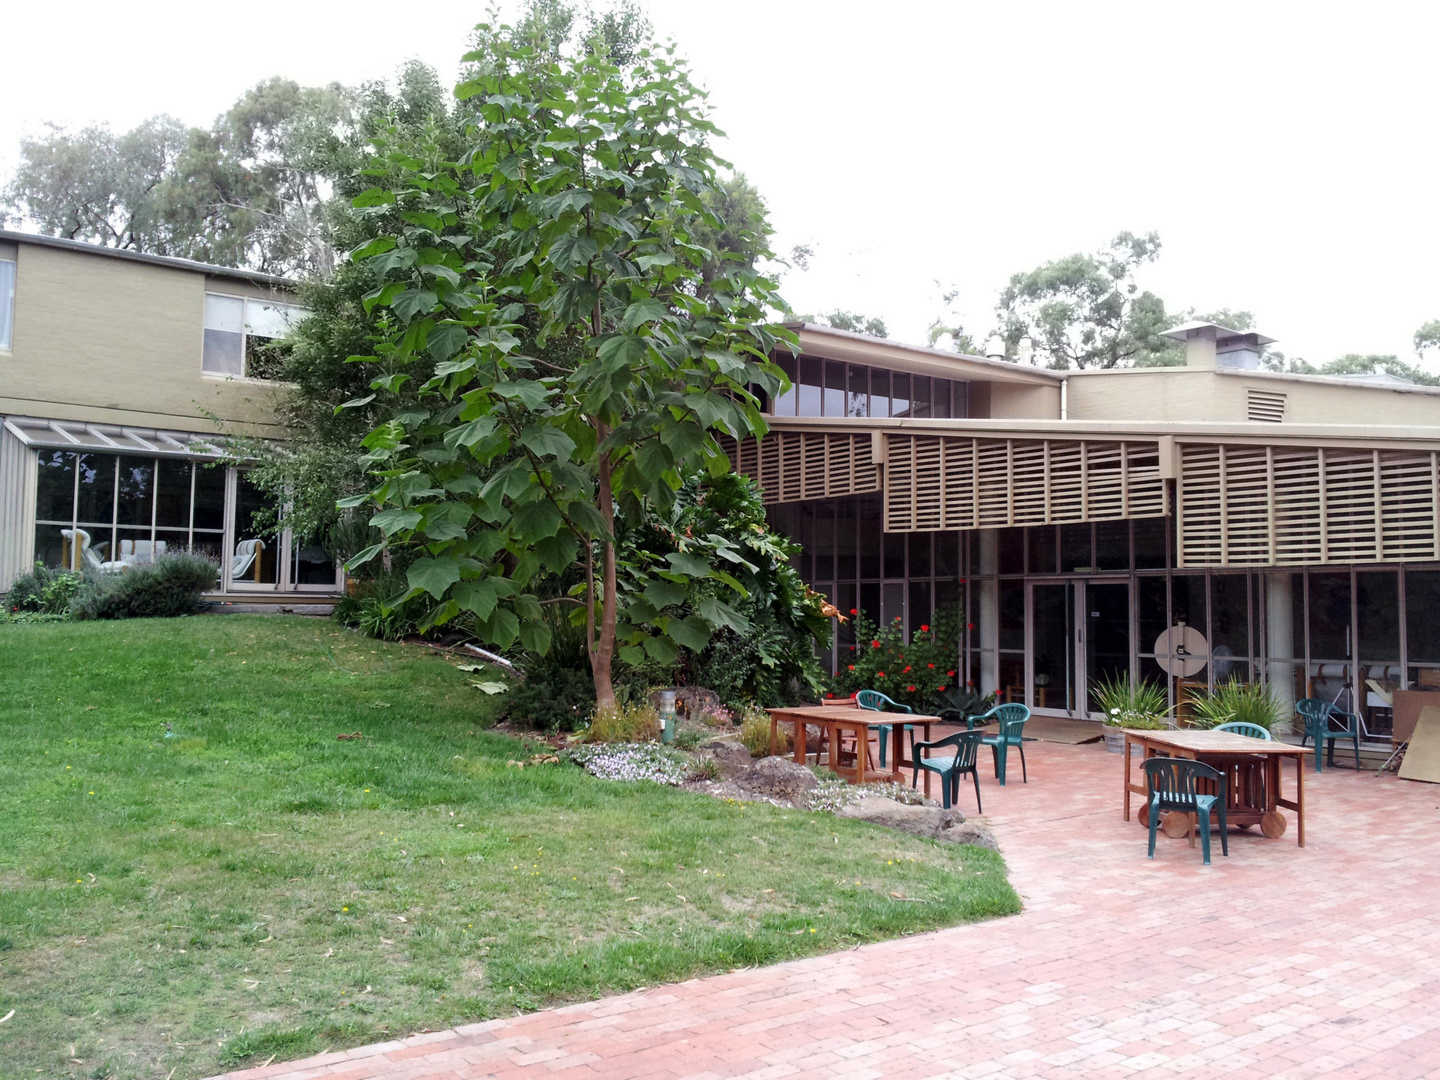 Brahma kumaris center at backster,australia - 10